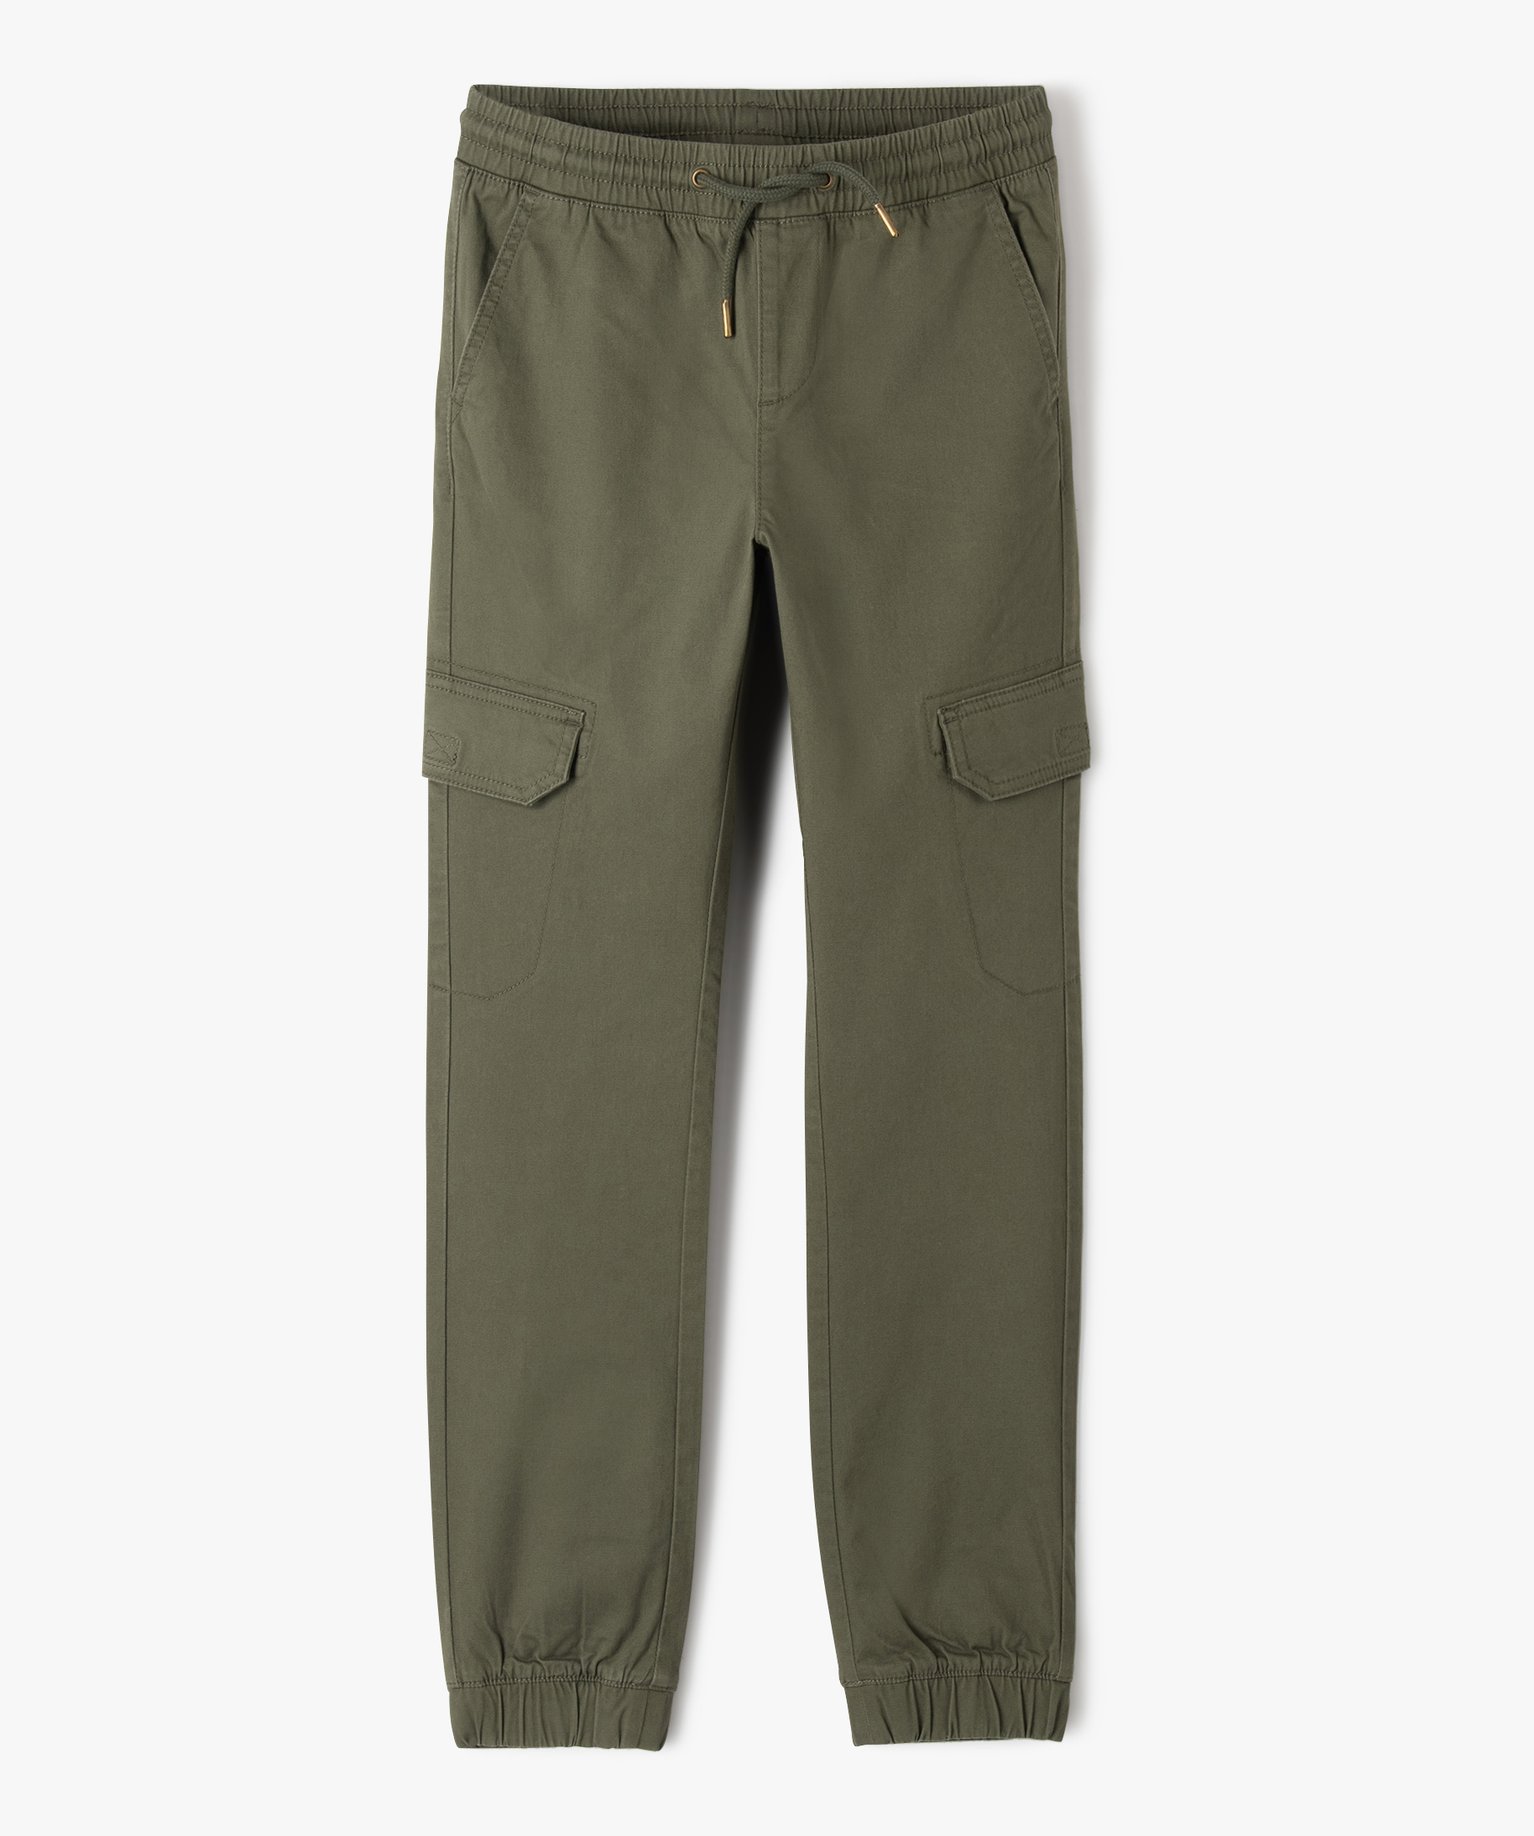 pantalon garcon en toile unie coupe jogger vert pantalons